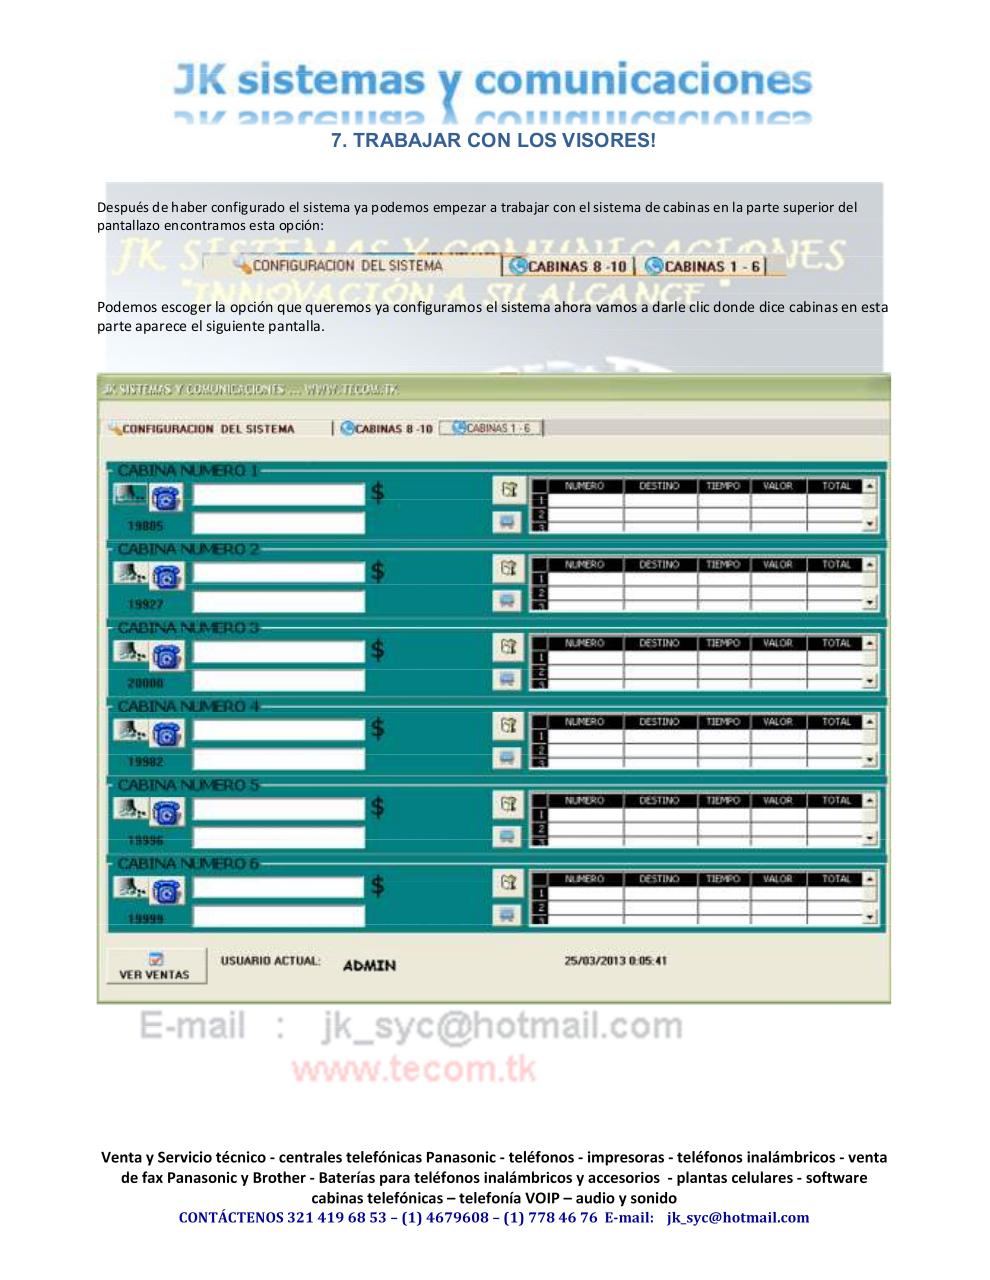 Vista previa del archivo PDF manual-software-cabinas-321-419-68-53-1-467-96-08.pdf